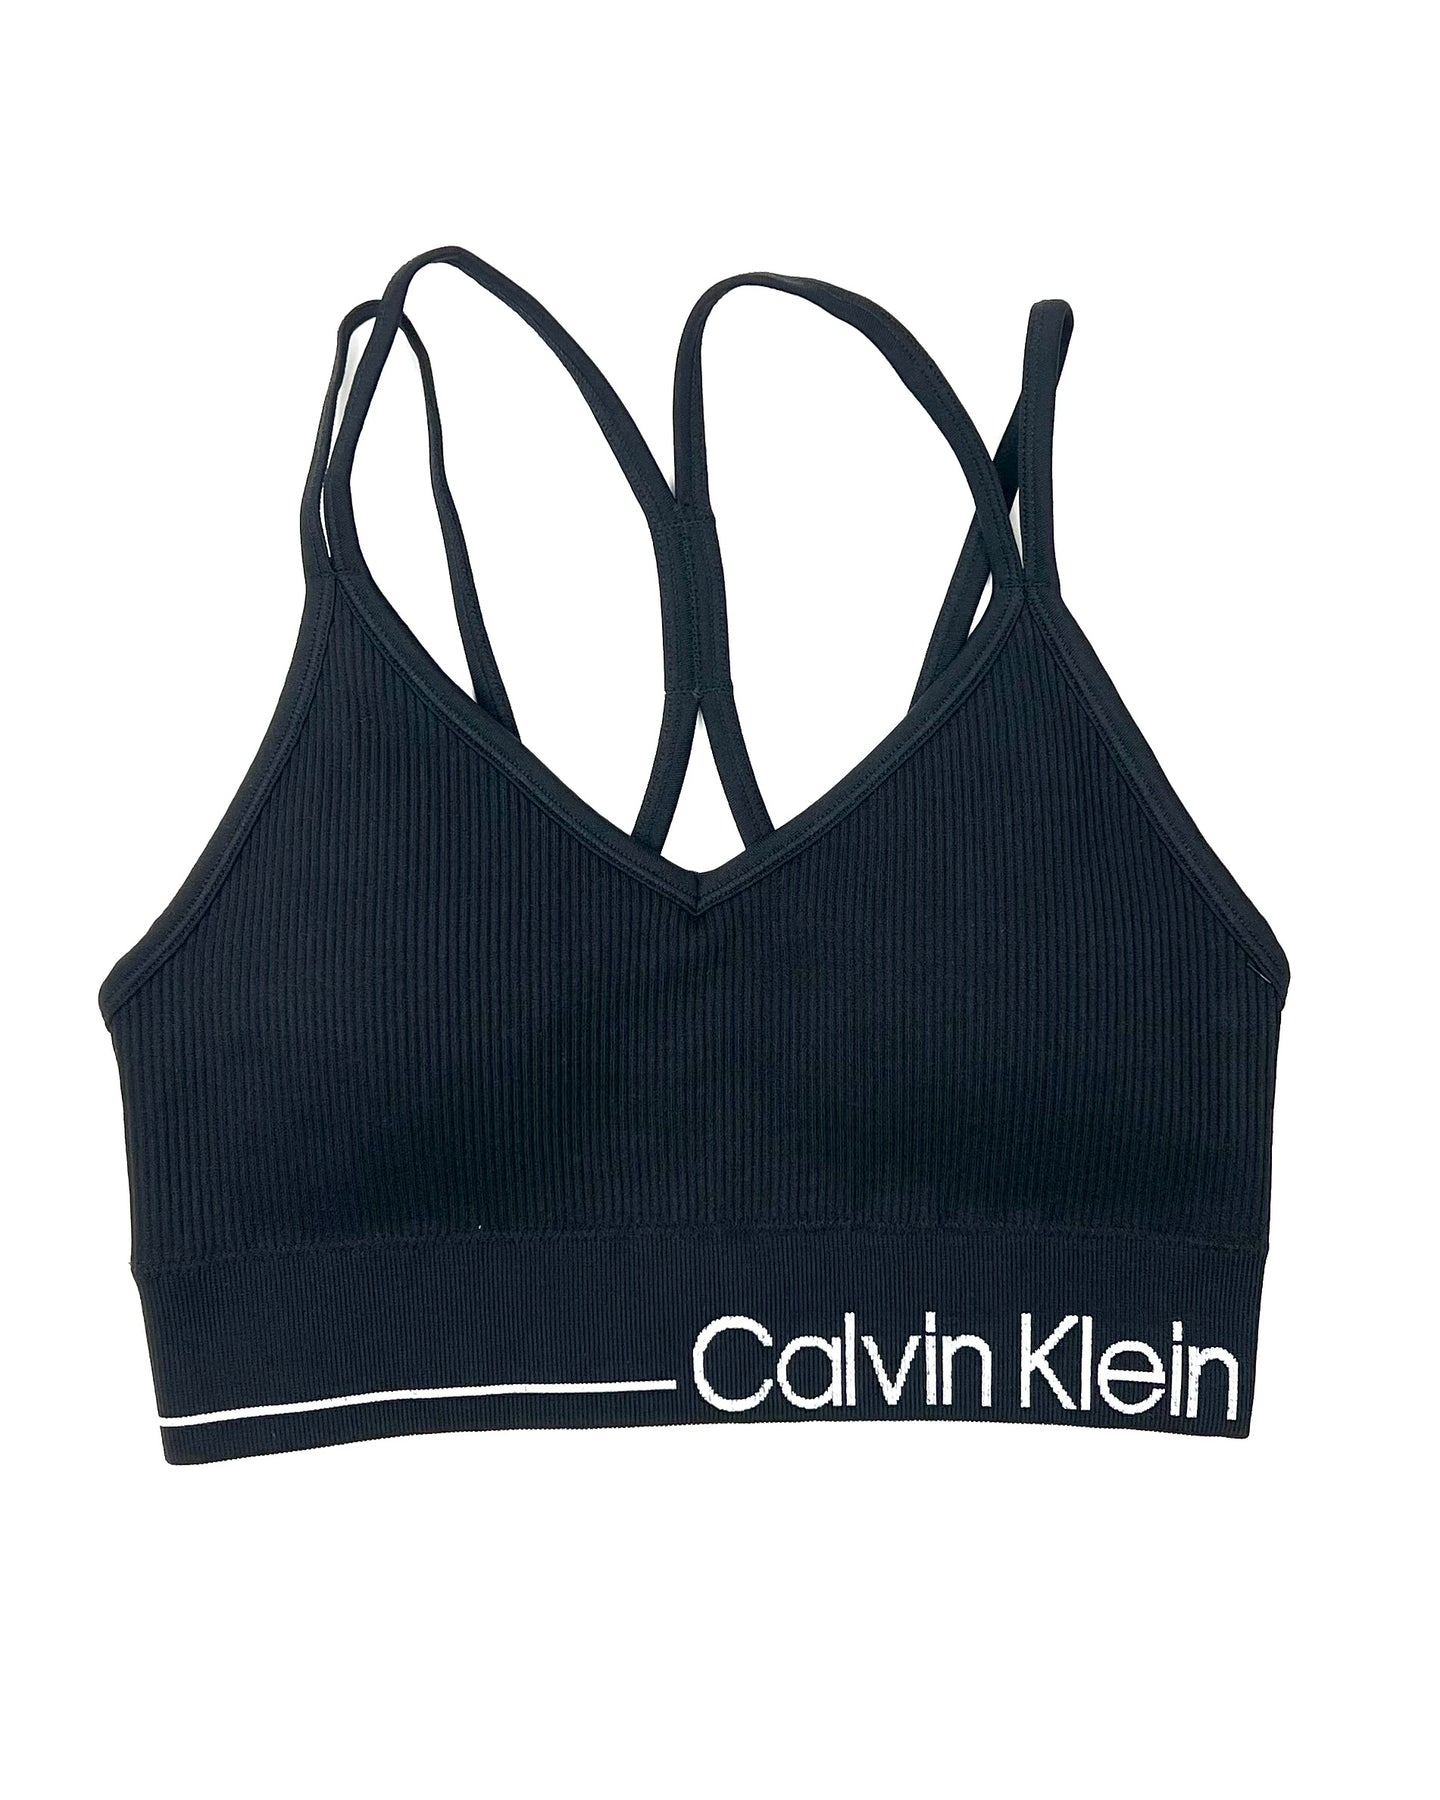 Calvin Klein Black Ribbed V-Neck Sports Bra - Small – The Fashion